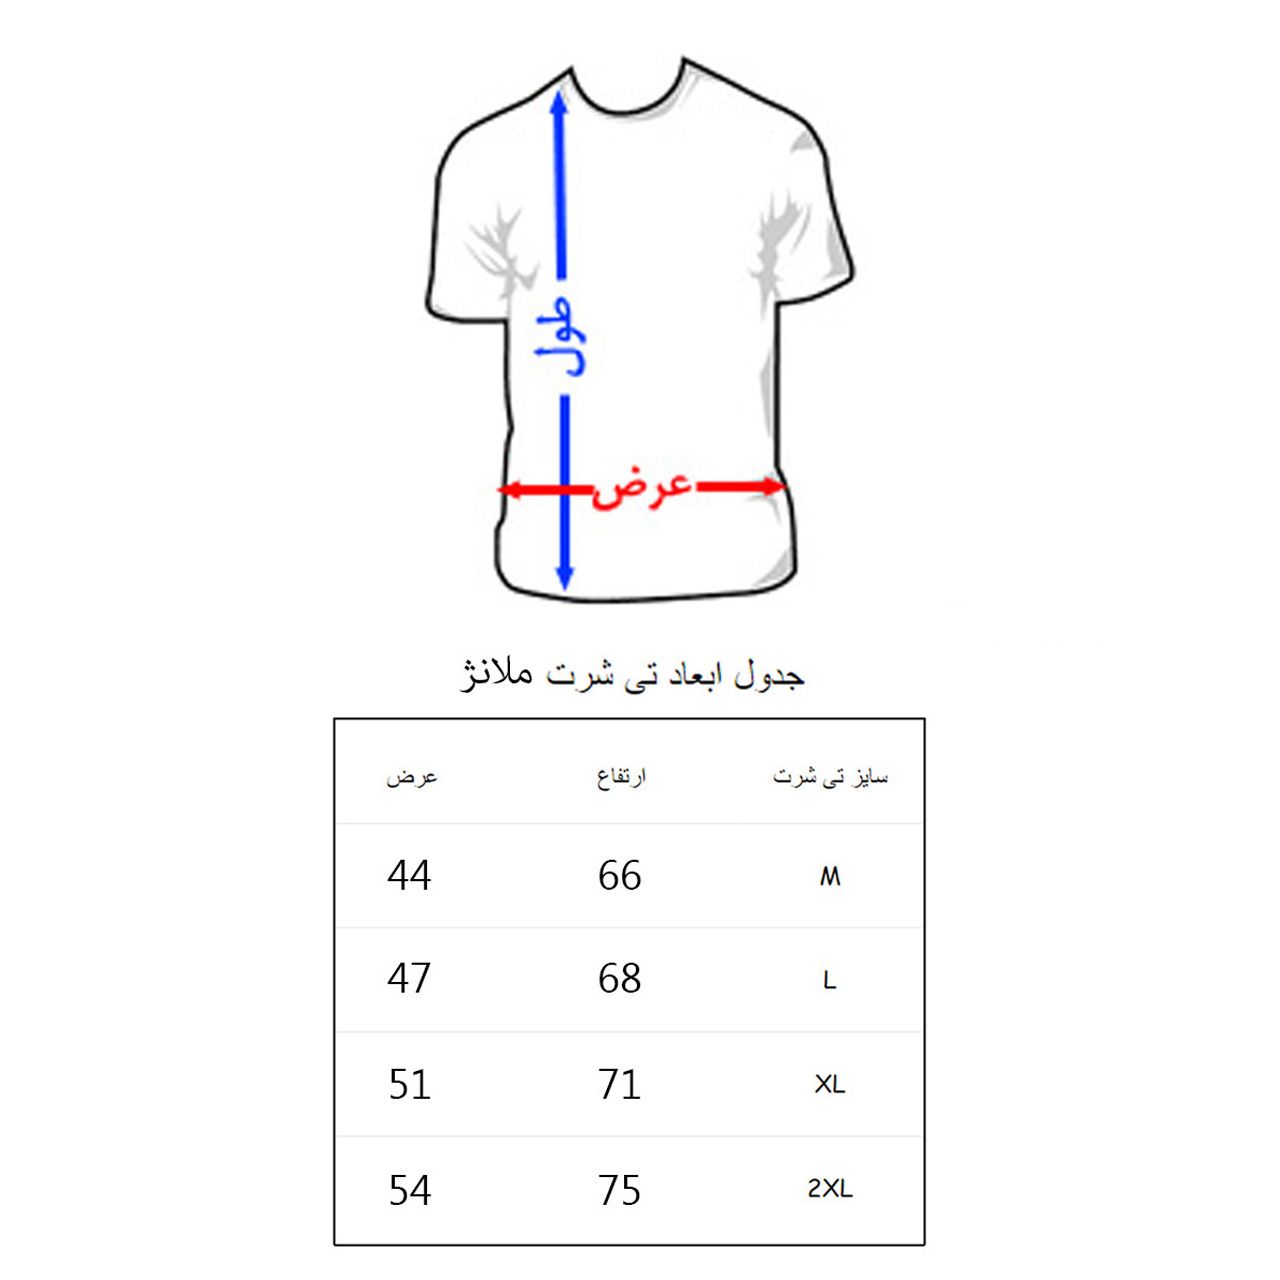 تی شرت مردانه به رسم طرح فولکس کد 2270 -  - 5